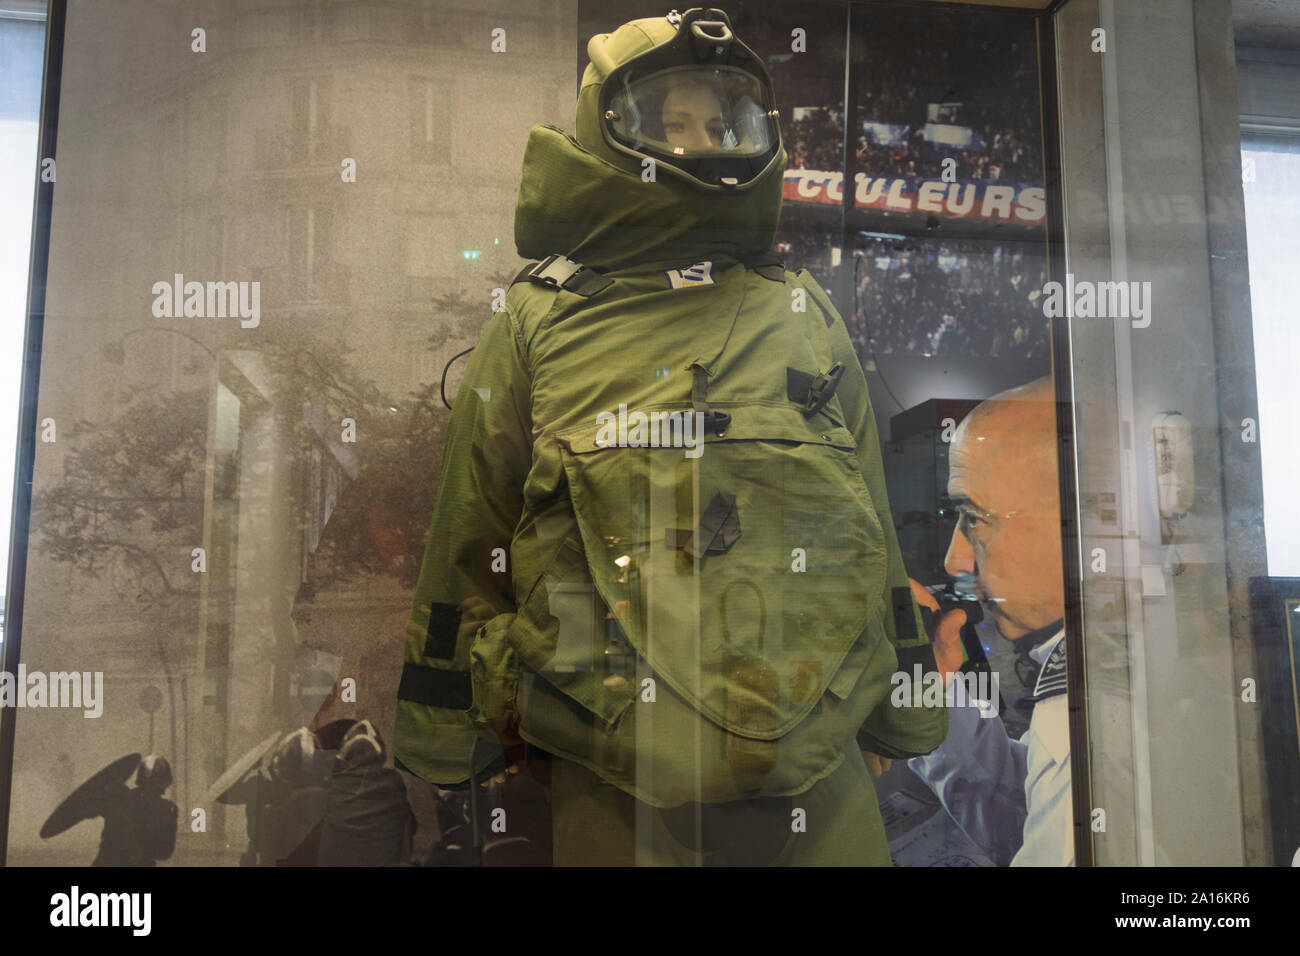 Paris, France - Sept 03, 2019: A bomb suit, Explosive Ordnance Disposal (EOD) suit or a blast suit in the Exhibition in the  'Musee de la Prefecture d Stock Photo